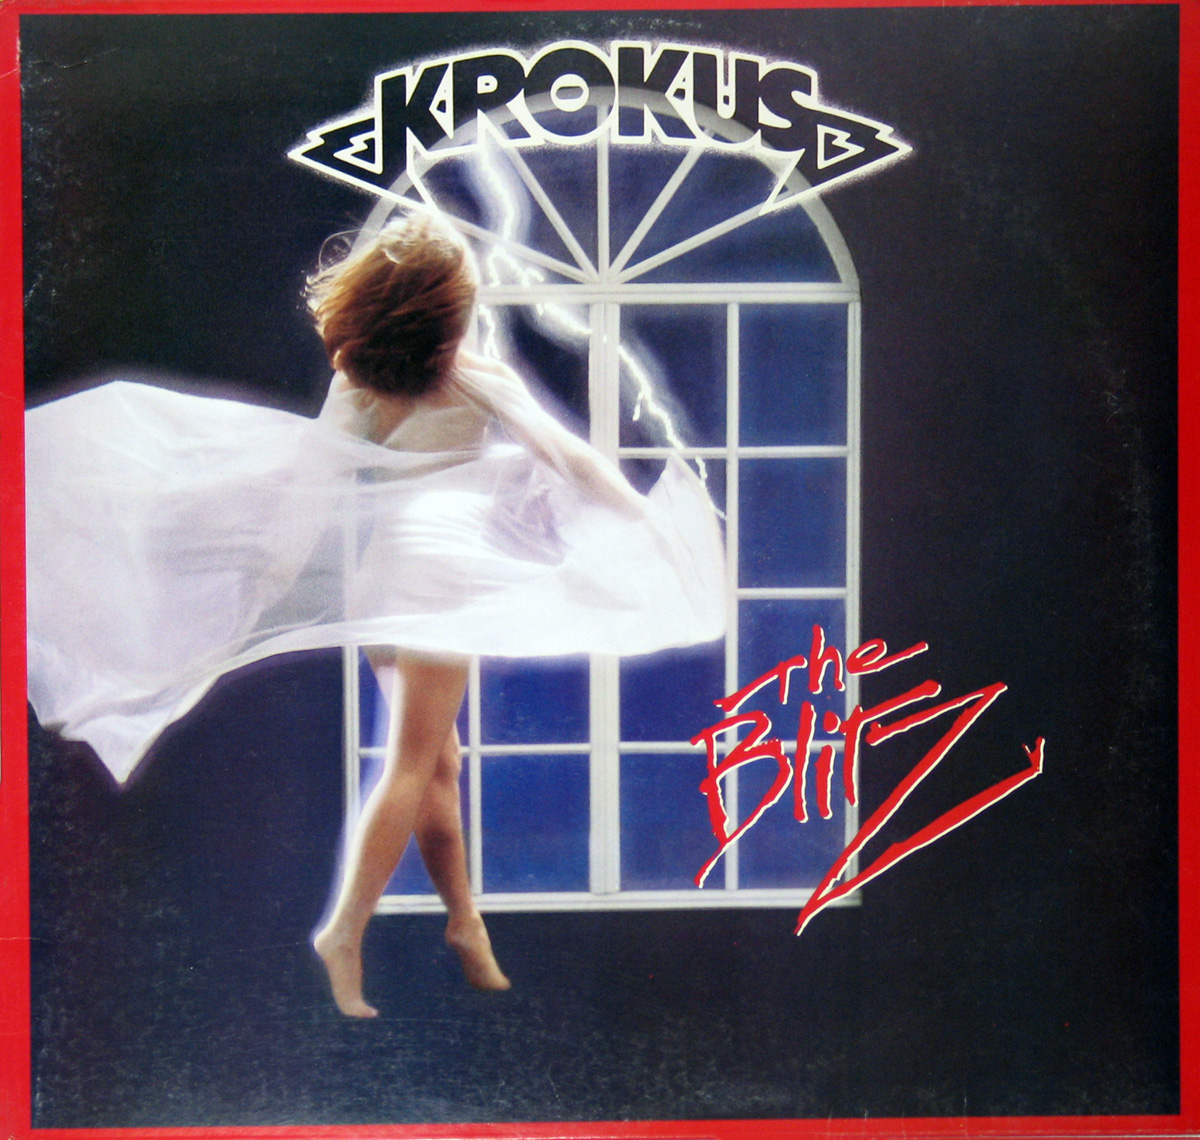 KROKUS - The Blitz USA Pressing 12" Vinyl Lp Album front cover https://vinyl-records.nl